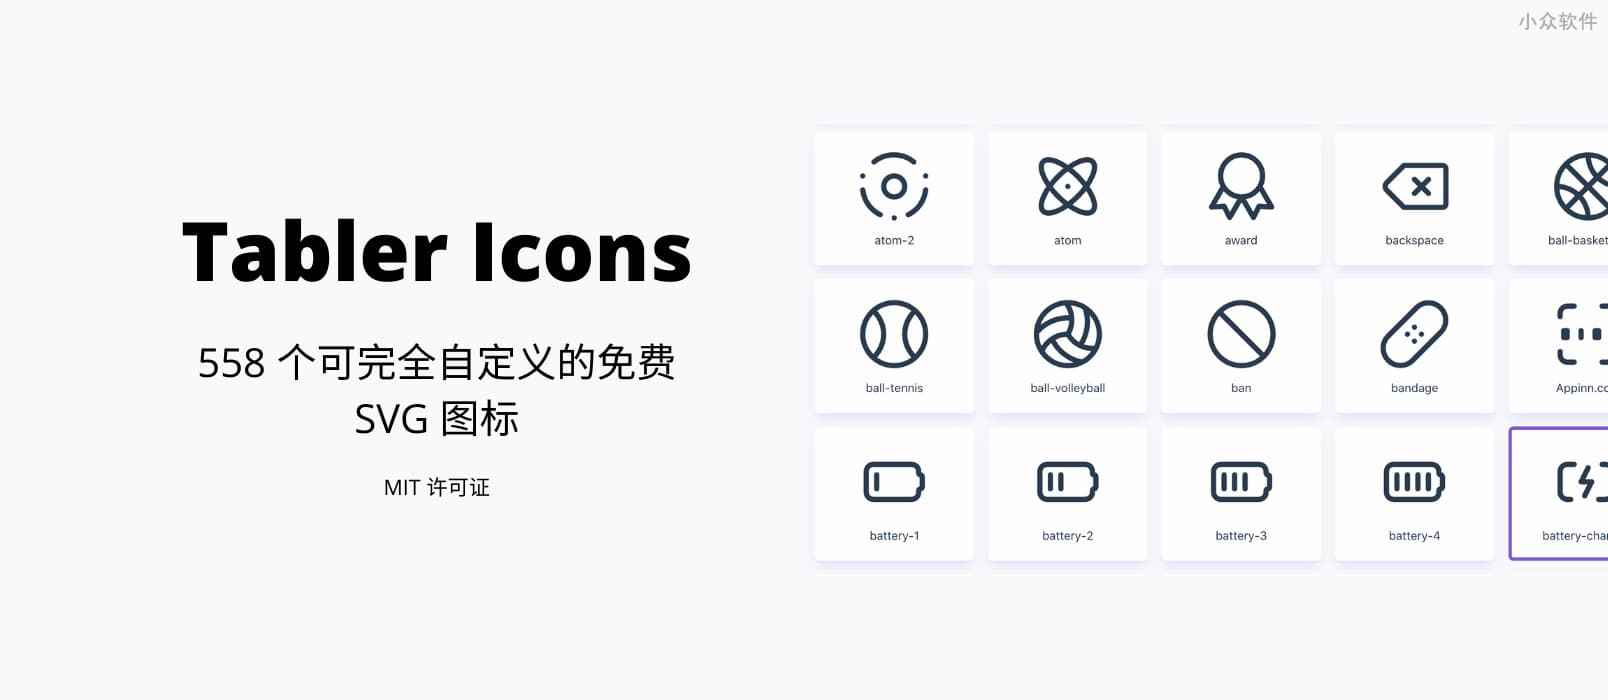 Tabler Icons – 558 个可完全自定义的免费 SVG 图标